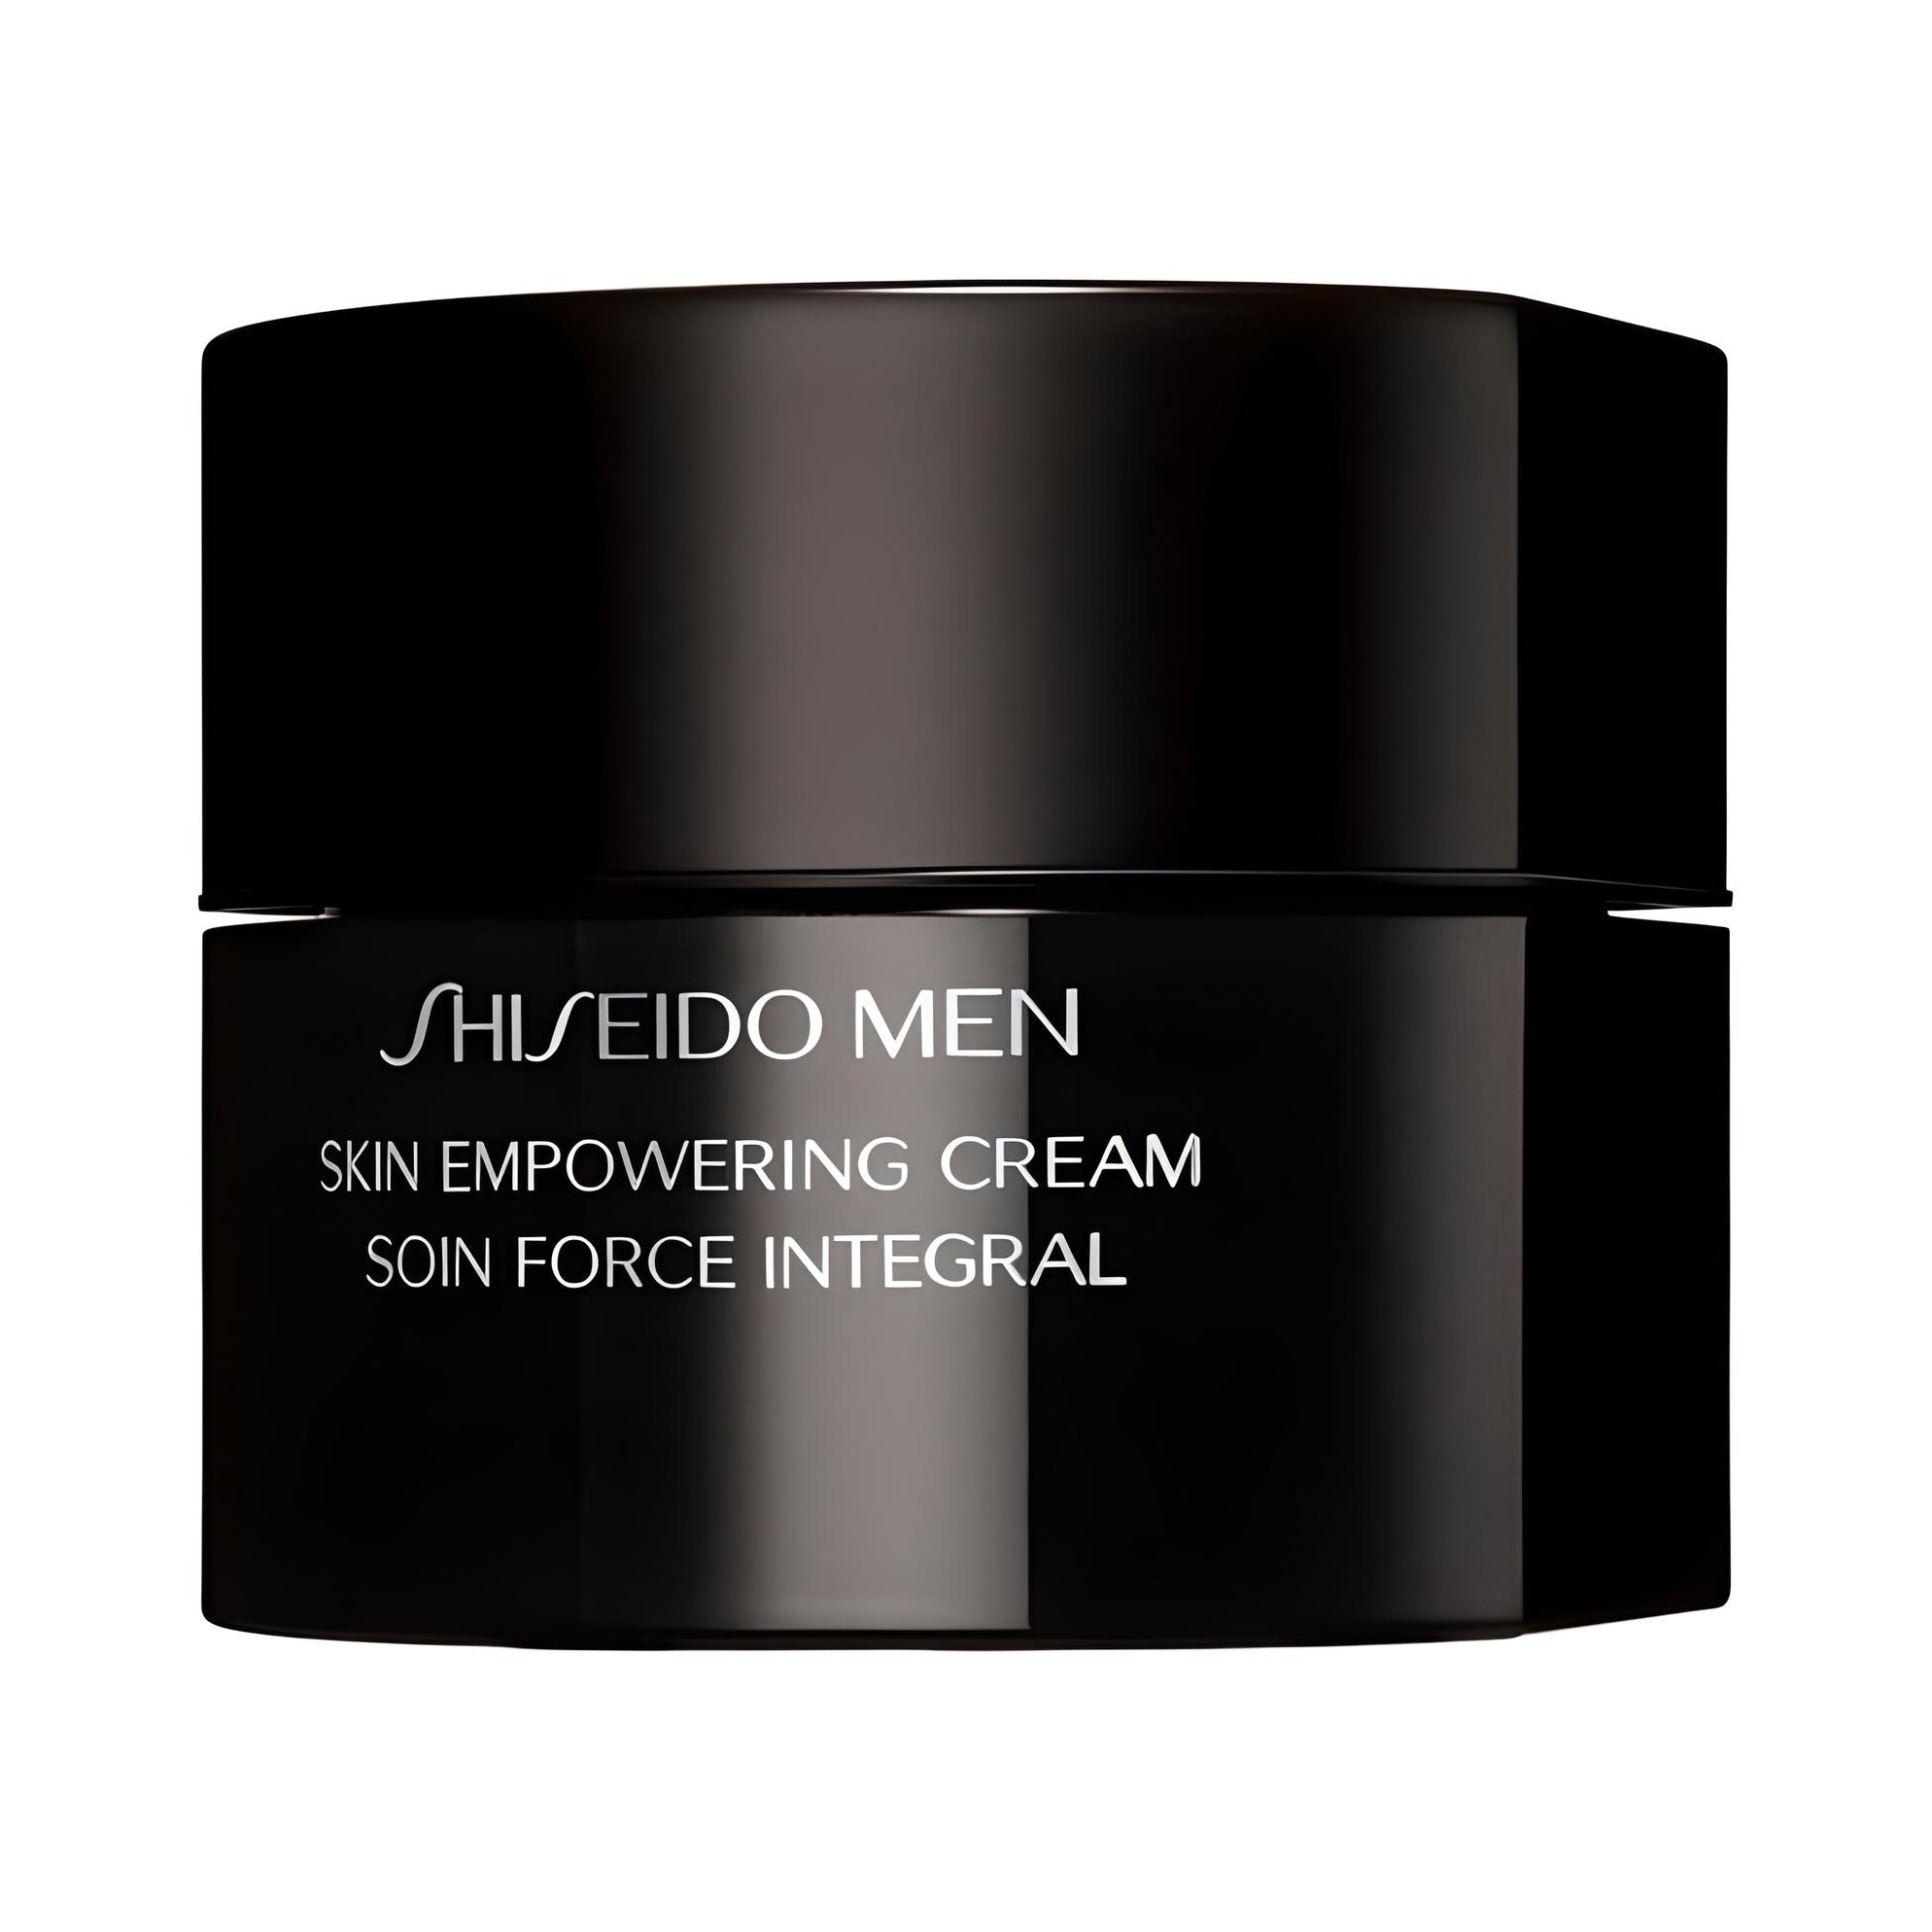 MEN skin empowering cream Gesichtspflege SHISEIDO   